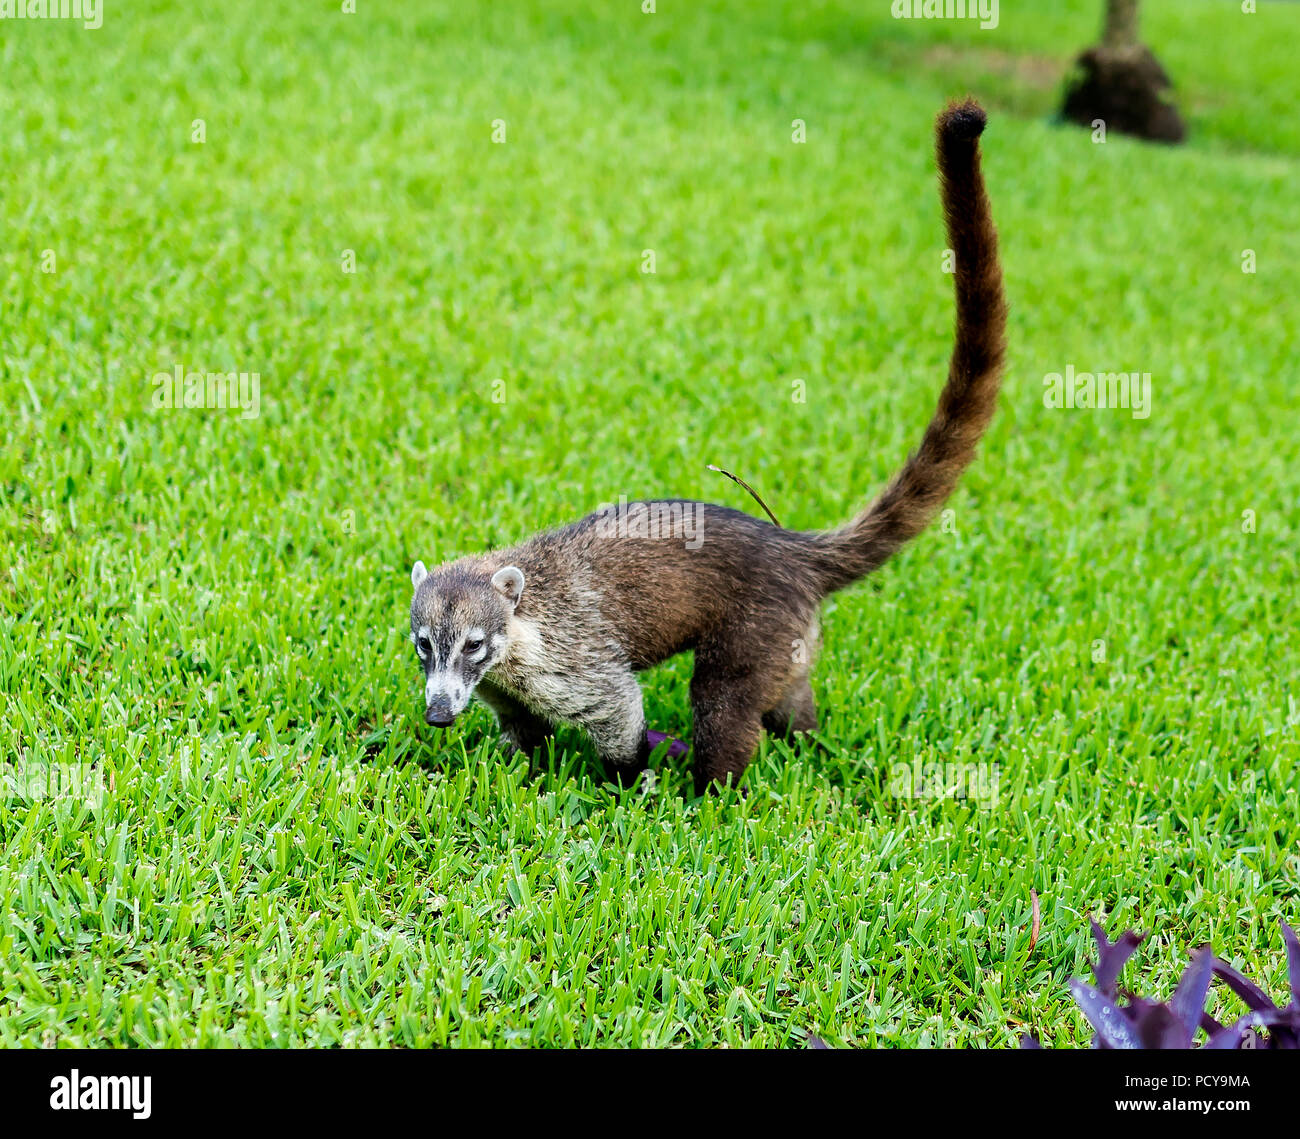 Coatimundi mexico mammal long tail hi-res stock photography and images -  Alamy